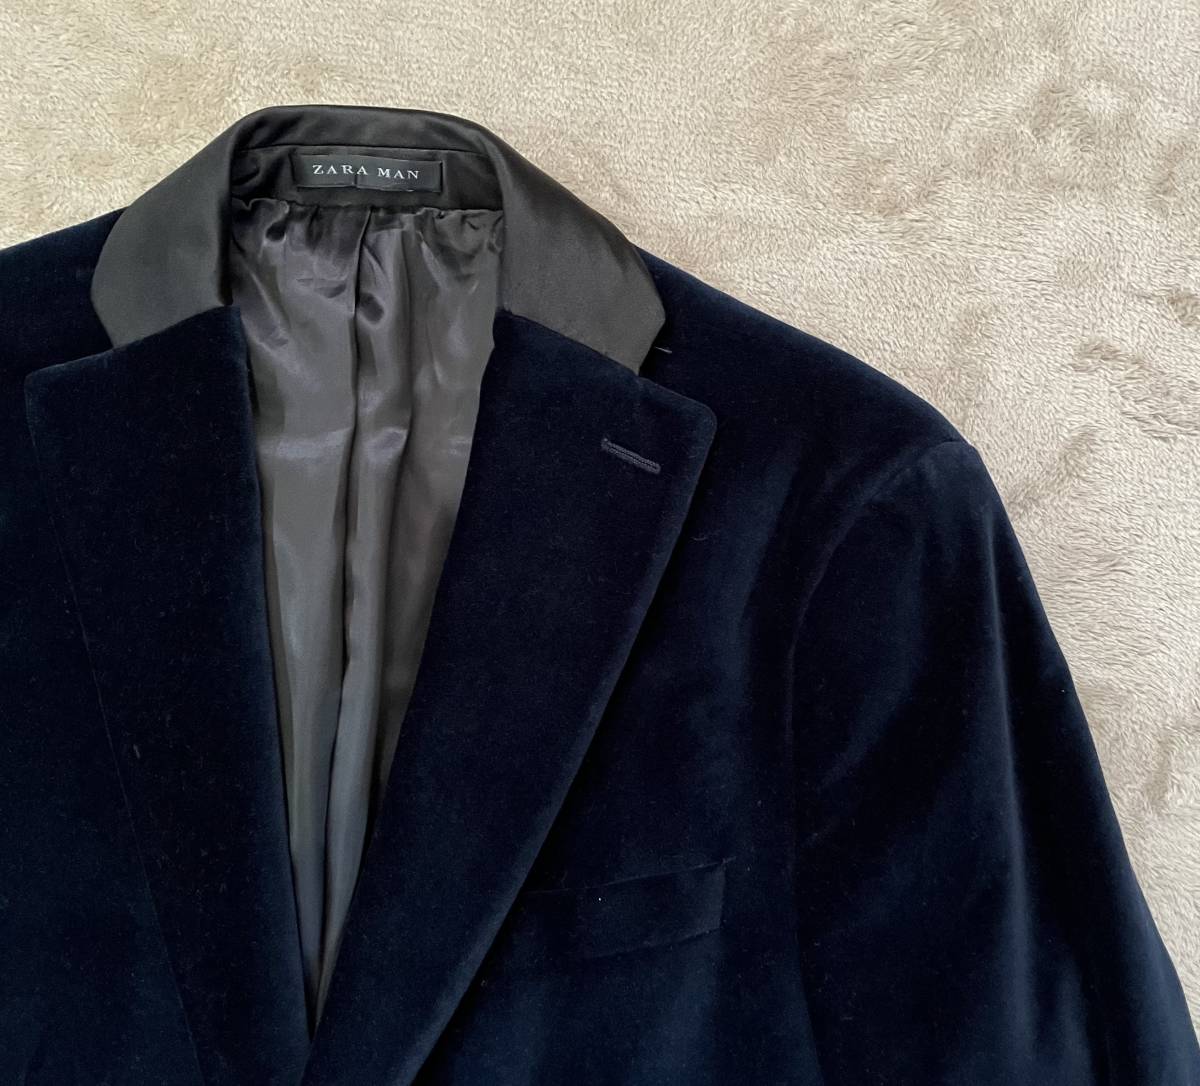 ◆ ZARA MAN (ザラ マン) ベロア 黒襟のテーラードジャケット (ネイビー) サイズM ◆_画像5